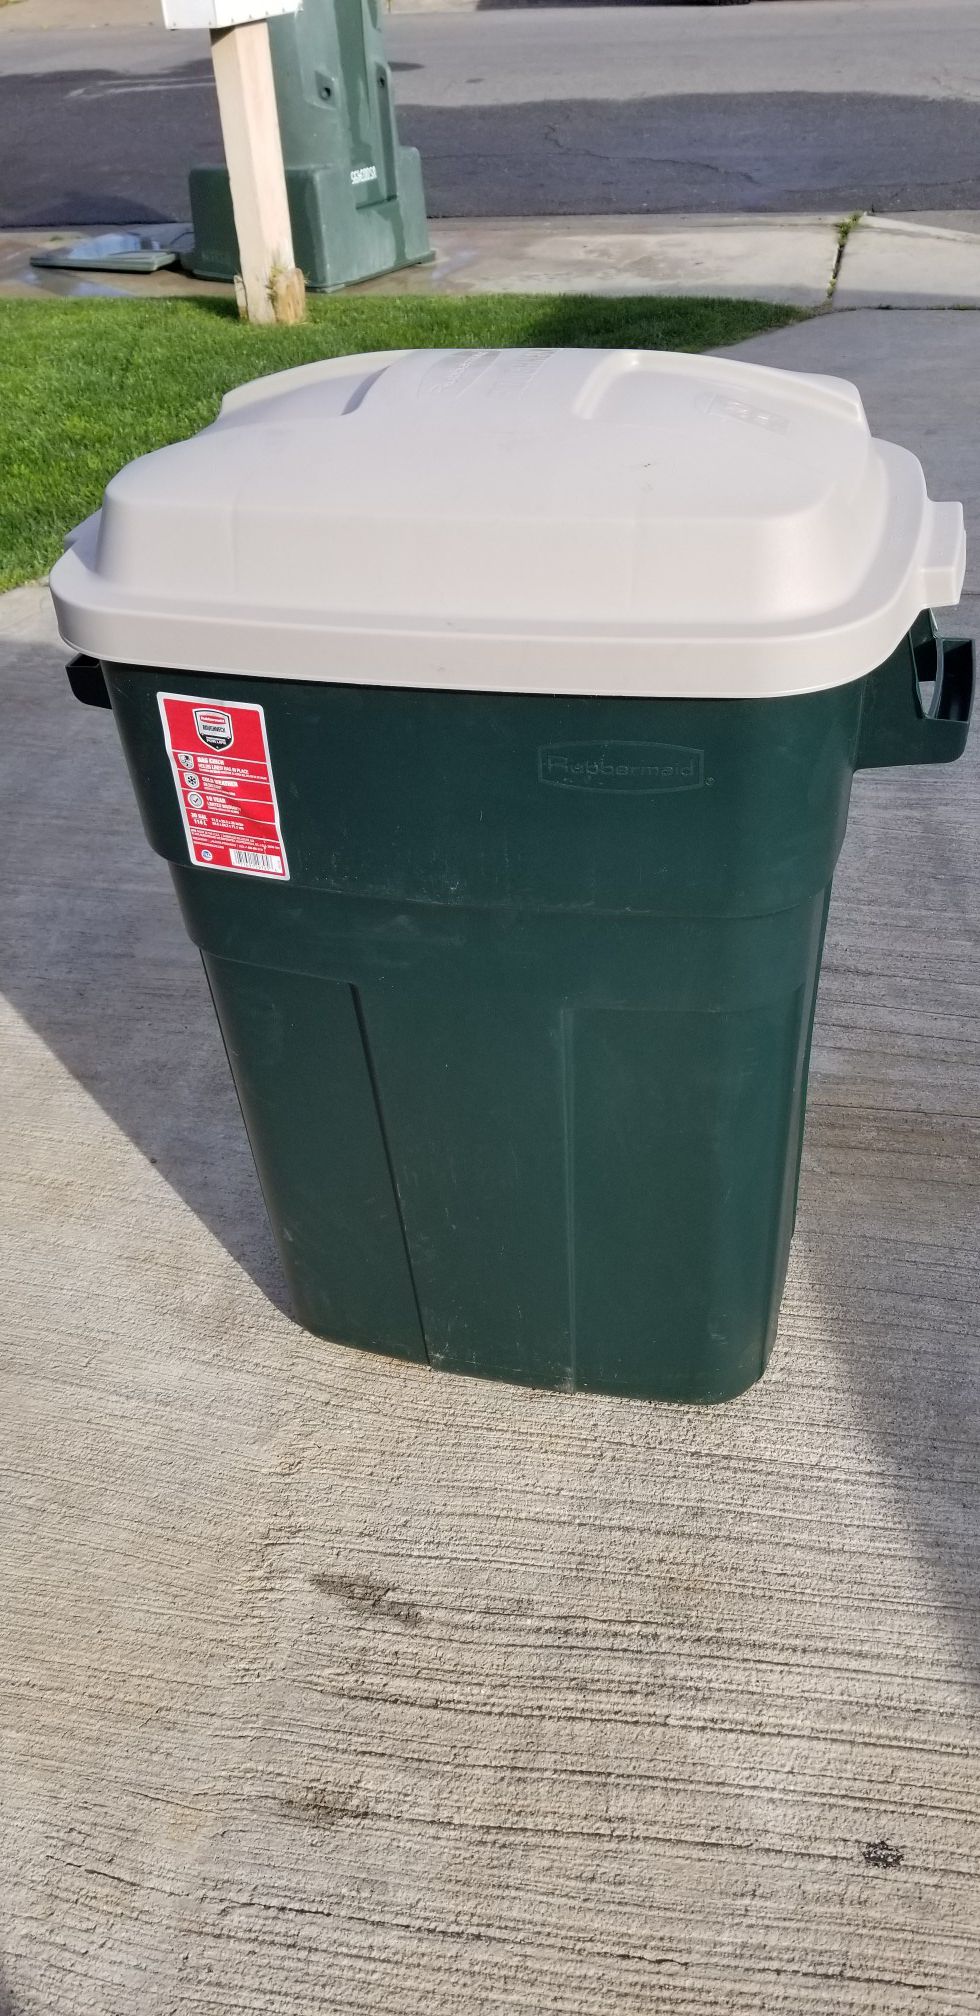 Rubbermaid Roughneck 30-Gallon Evergreen Plastic Trash Can